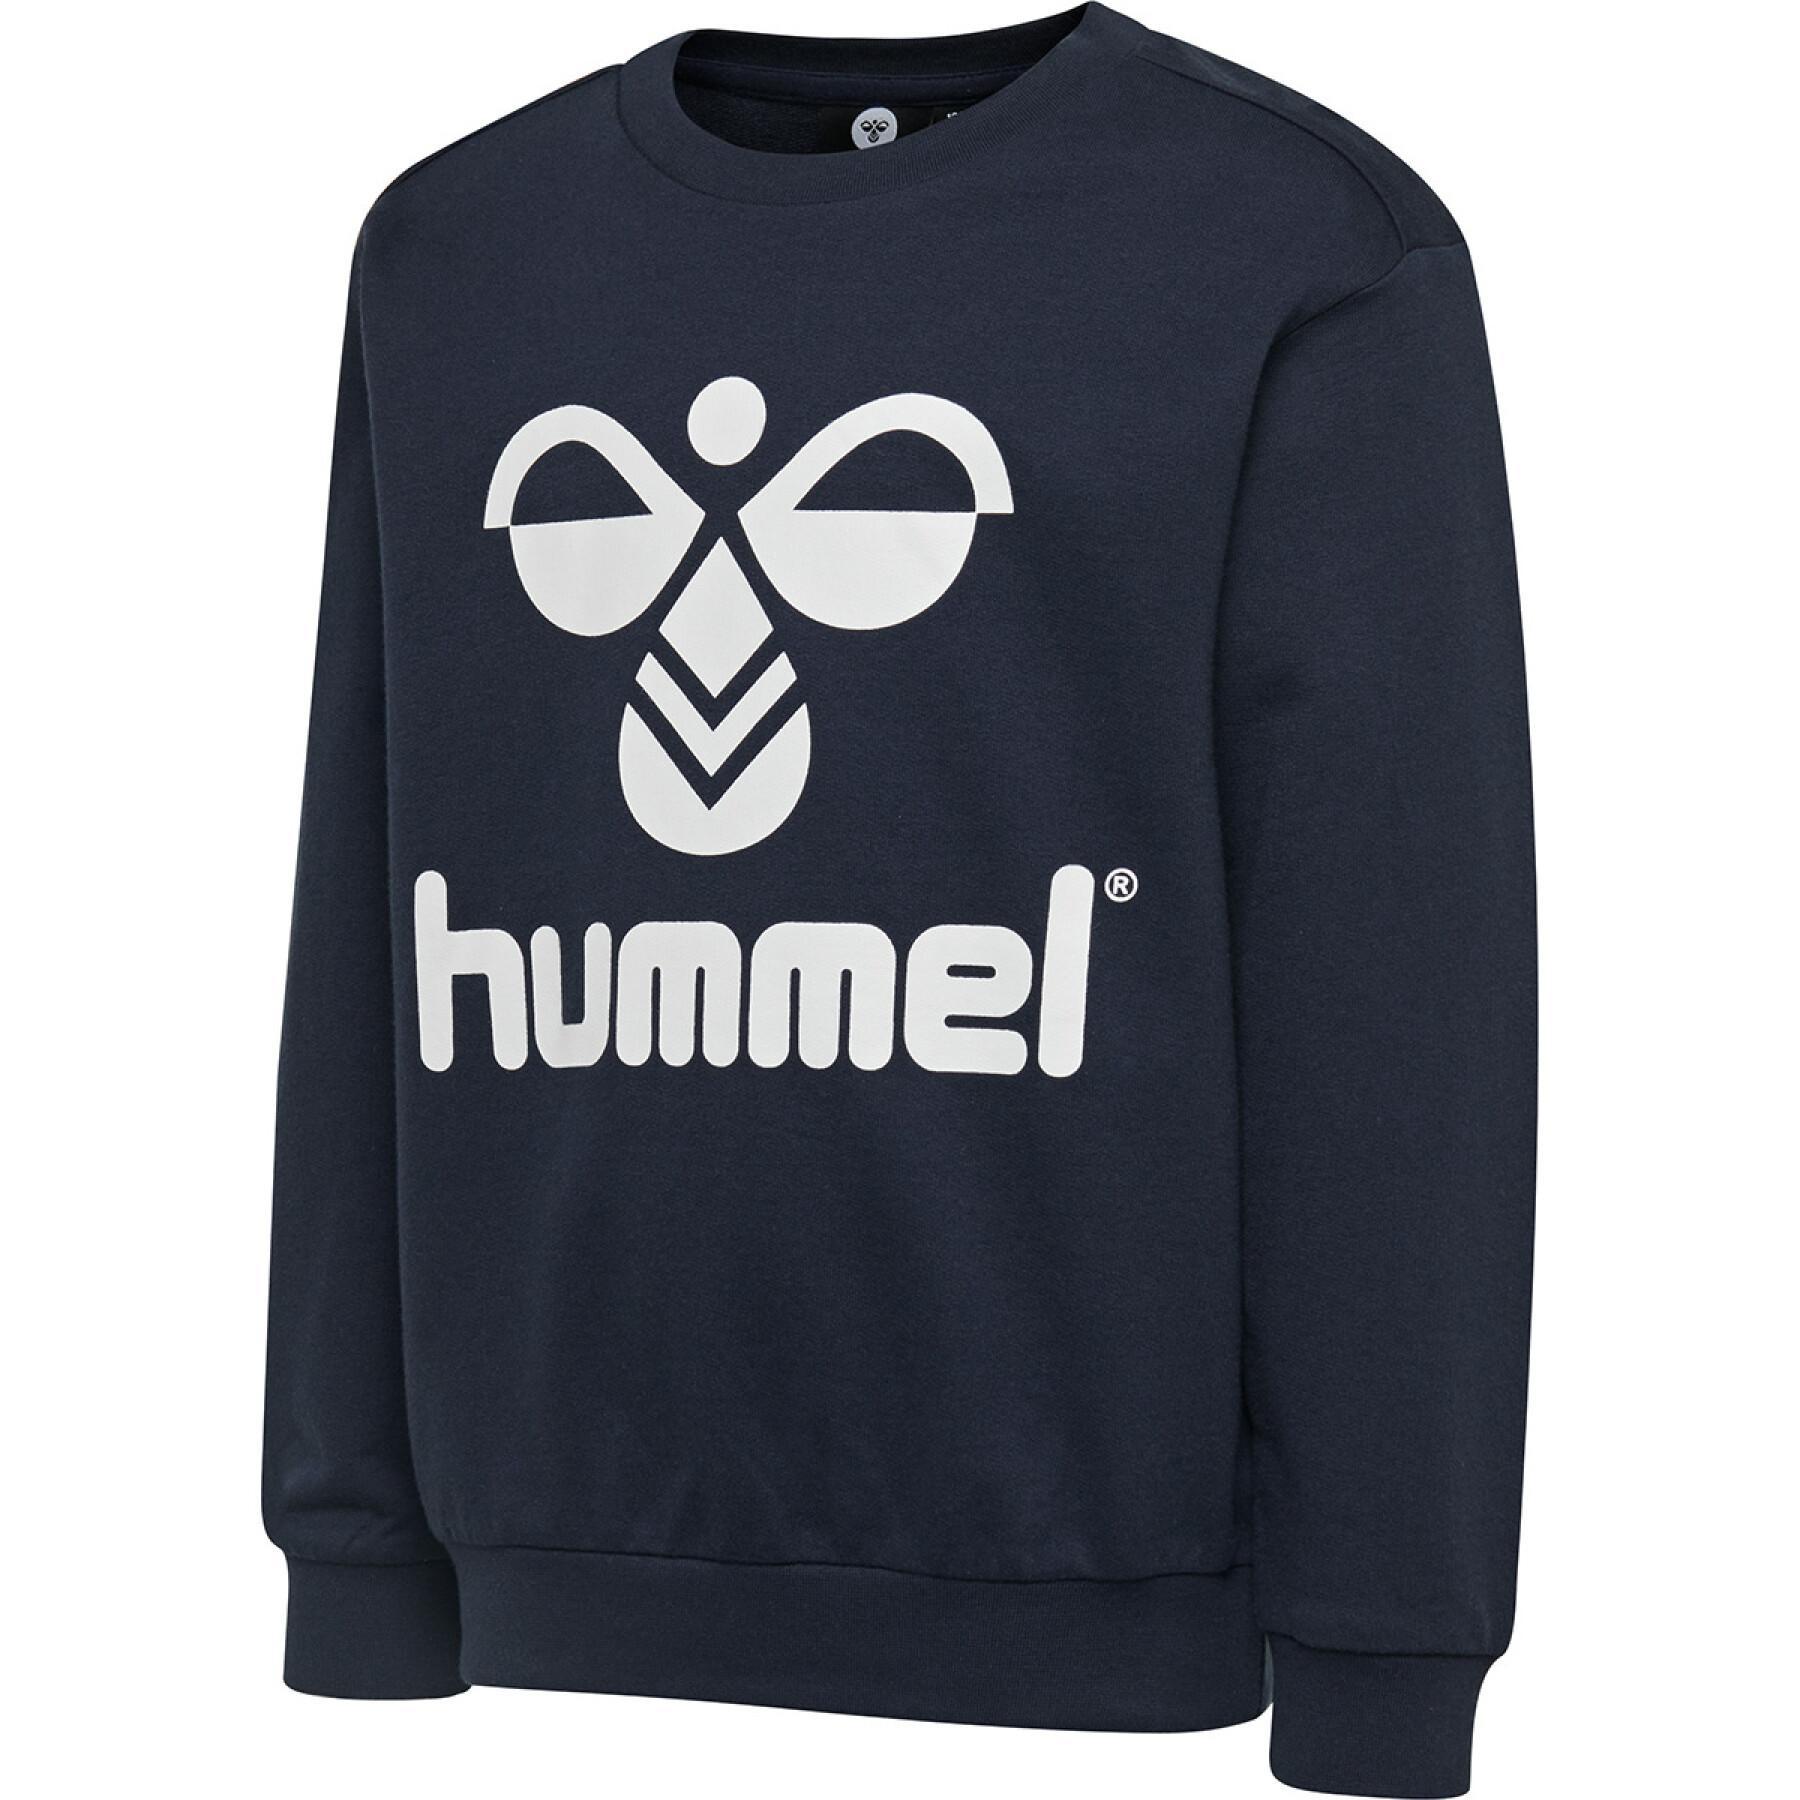 Sweatshirt child Hummel hmldos